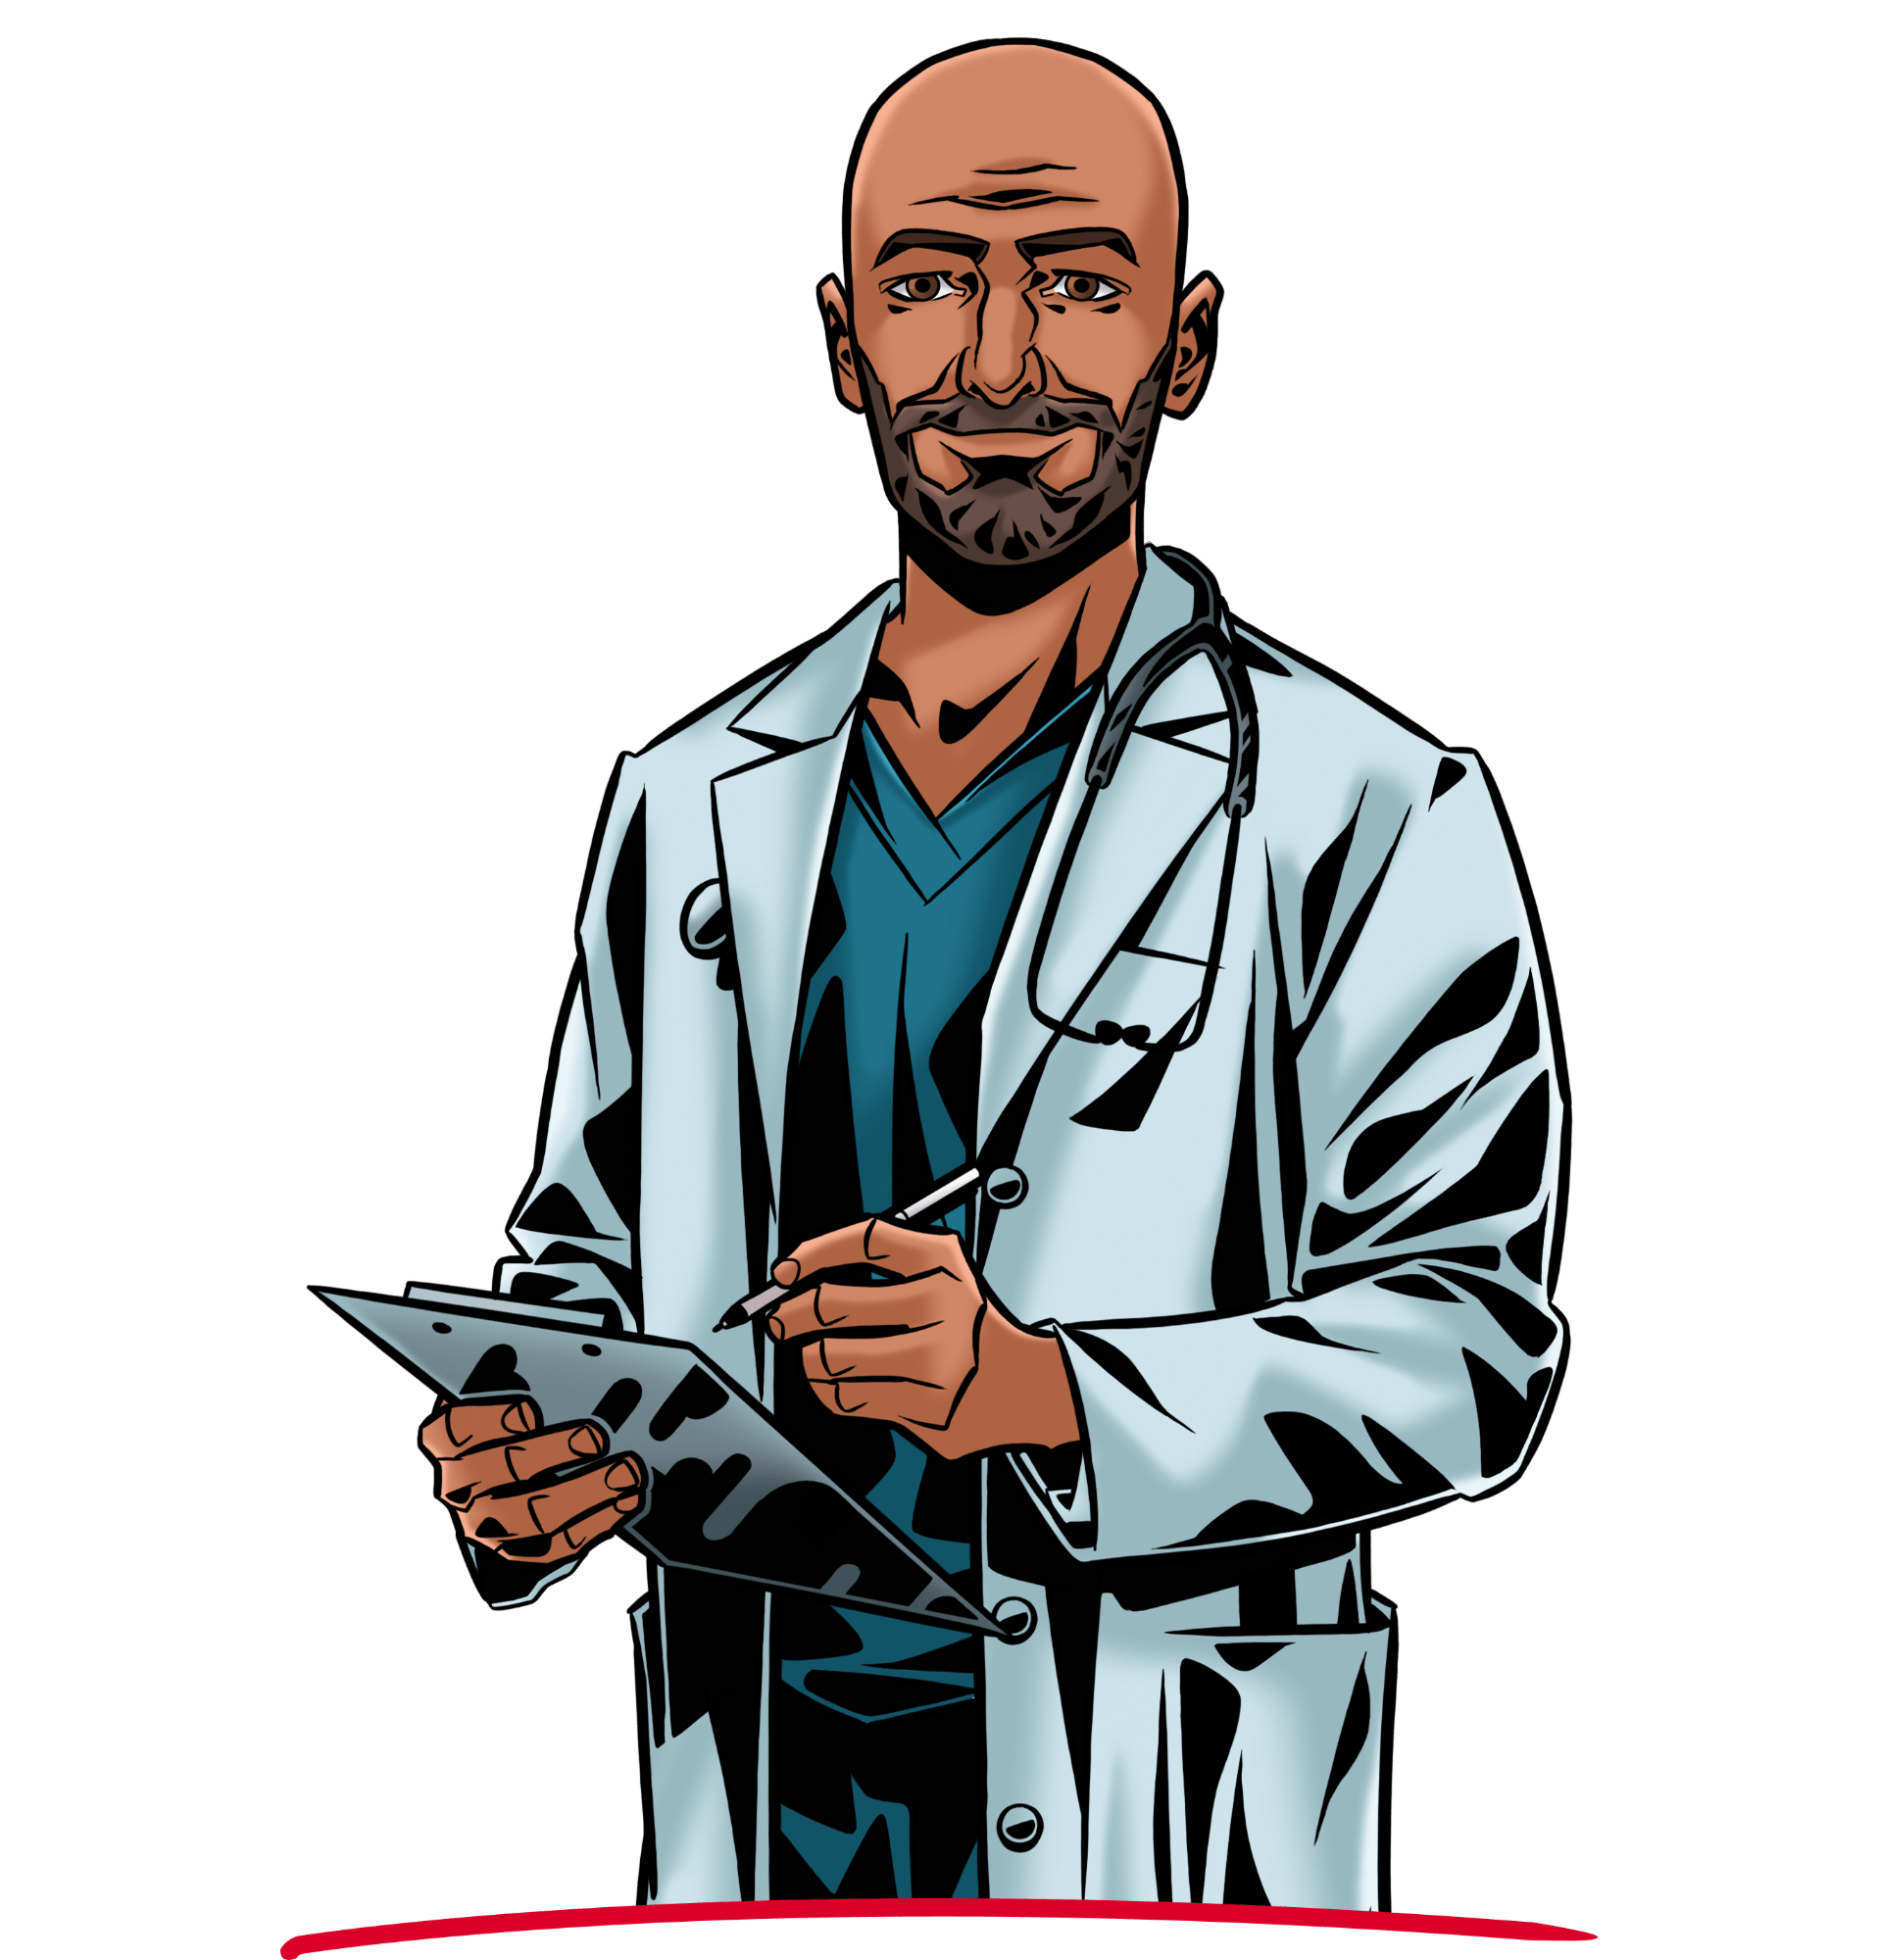 Dr. Daniel – Physician